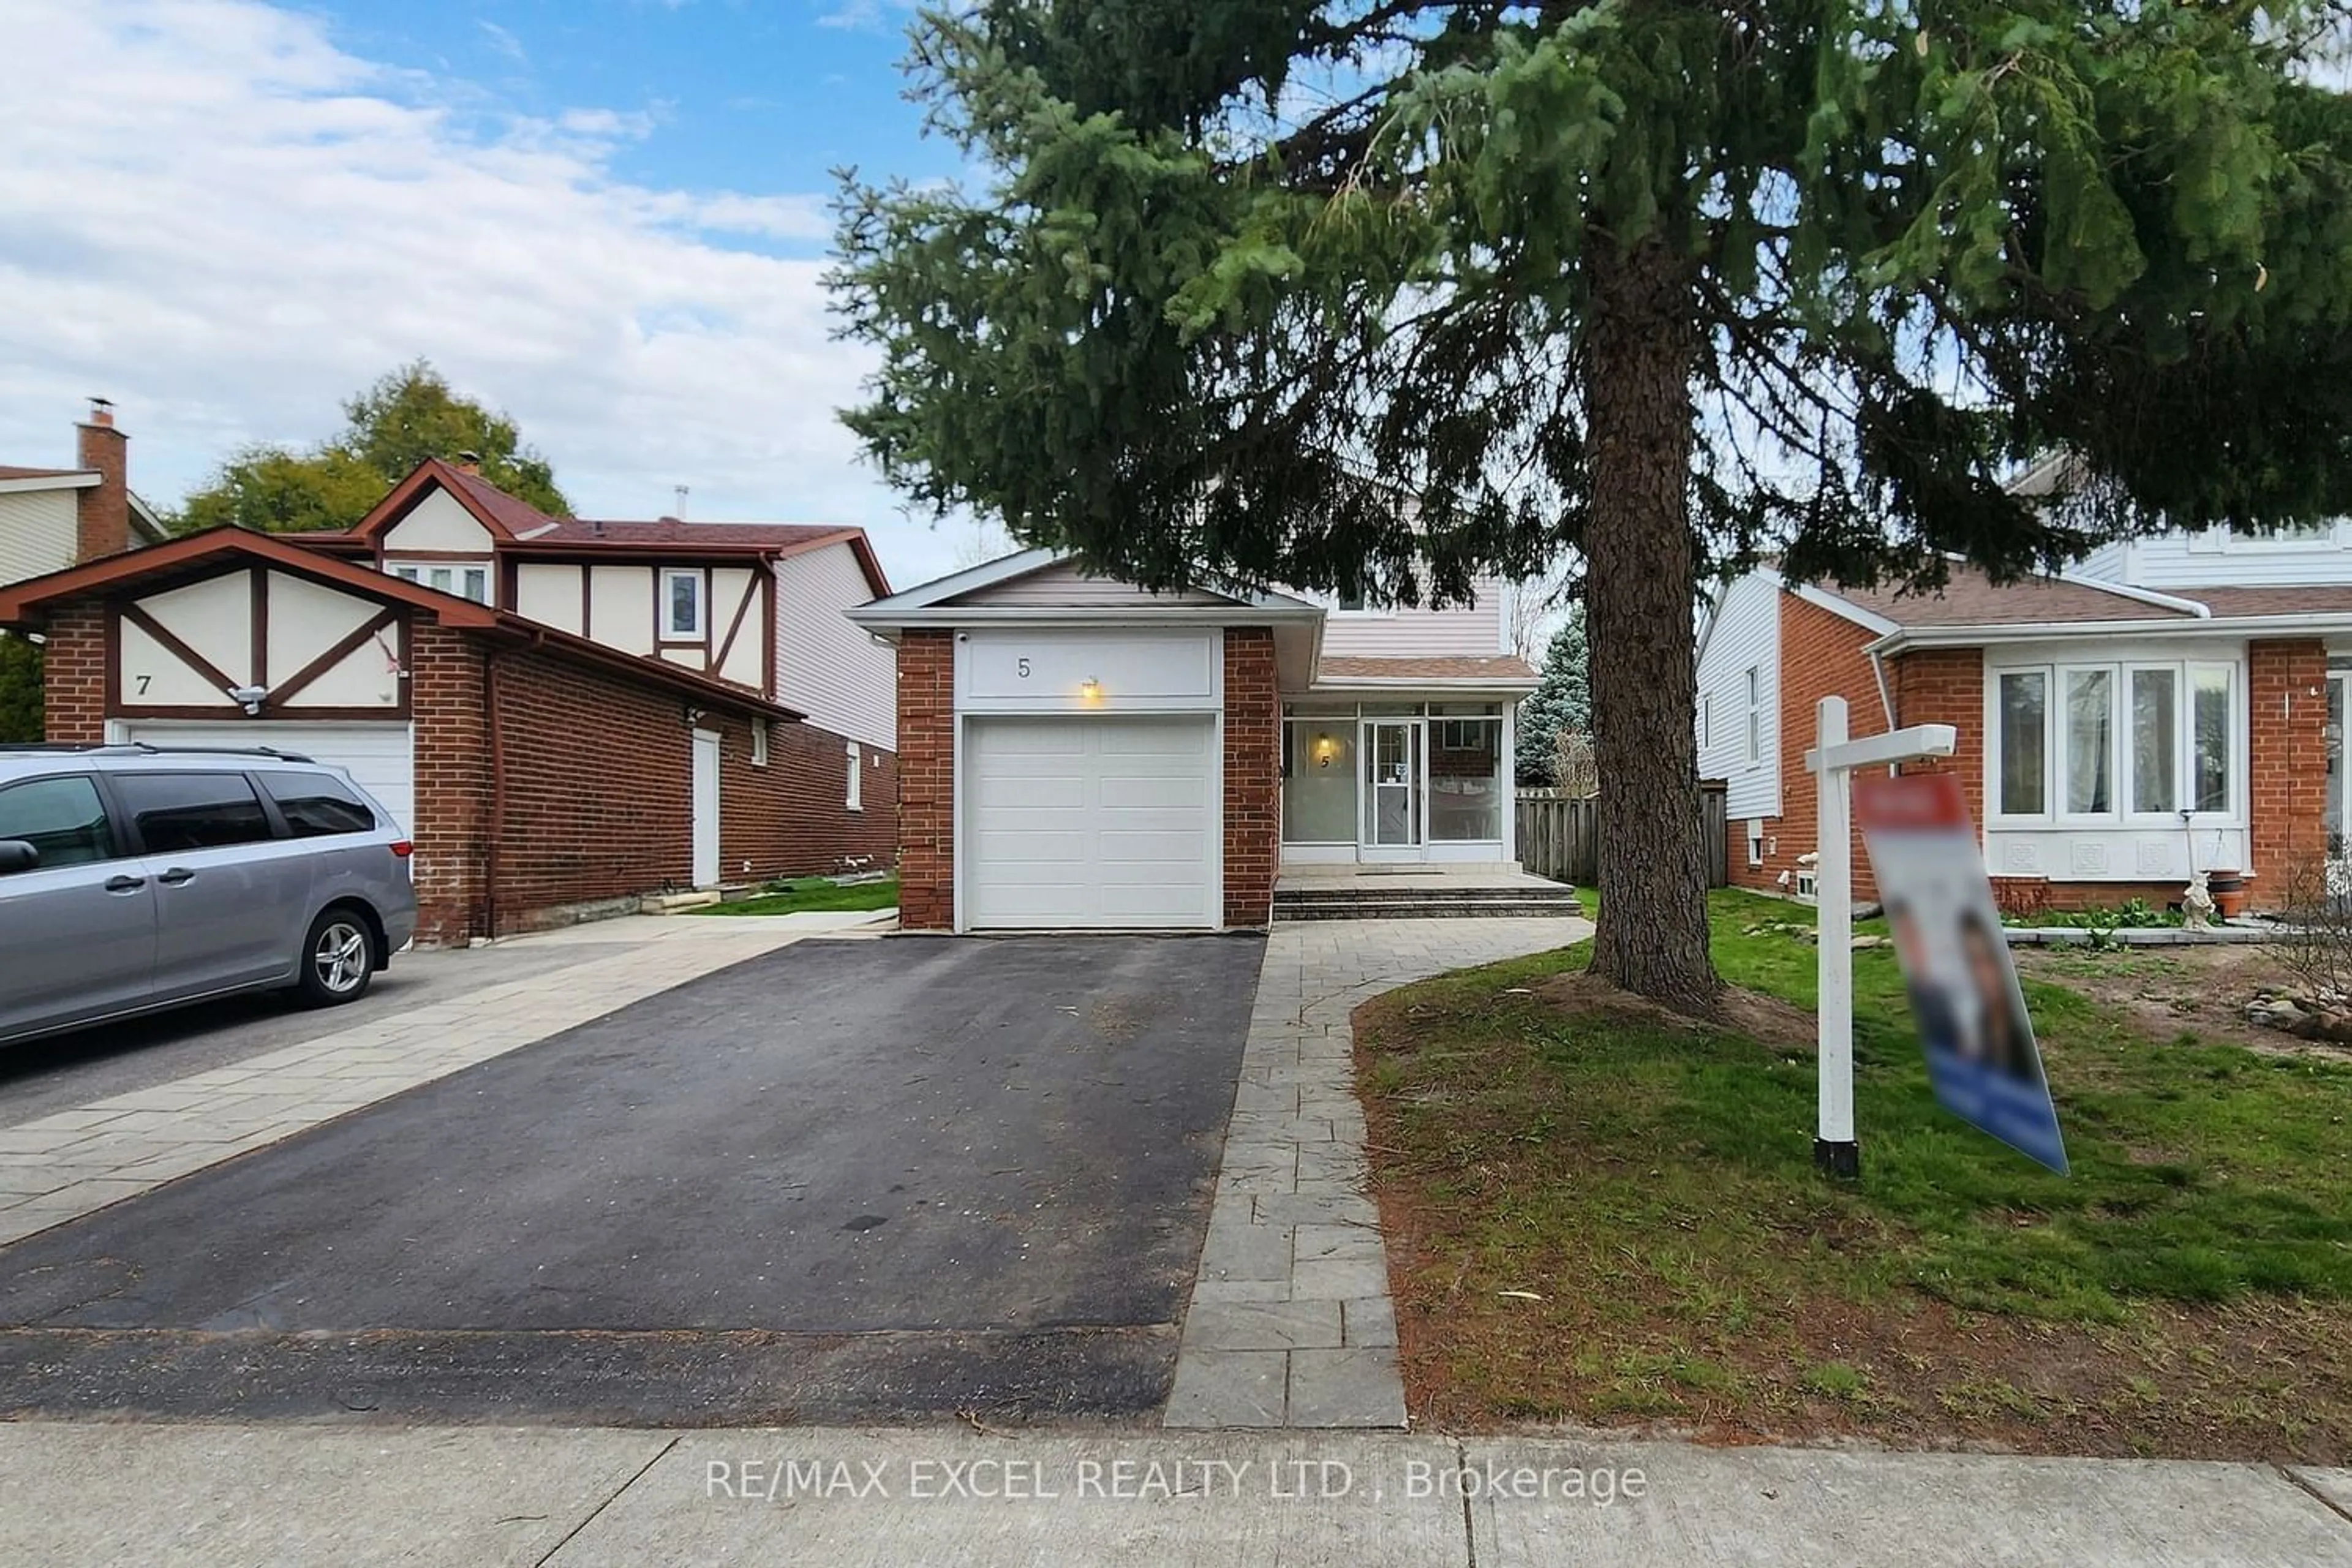 Home with brick exterior material for 5 Oakhaven Dr, Toronto Ontario M1V 1X8